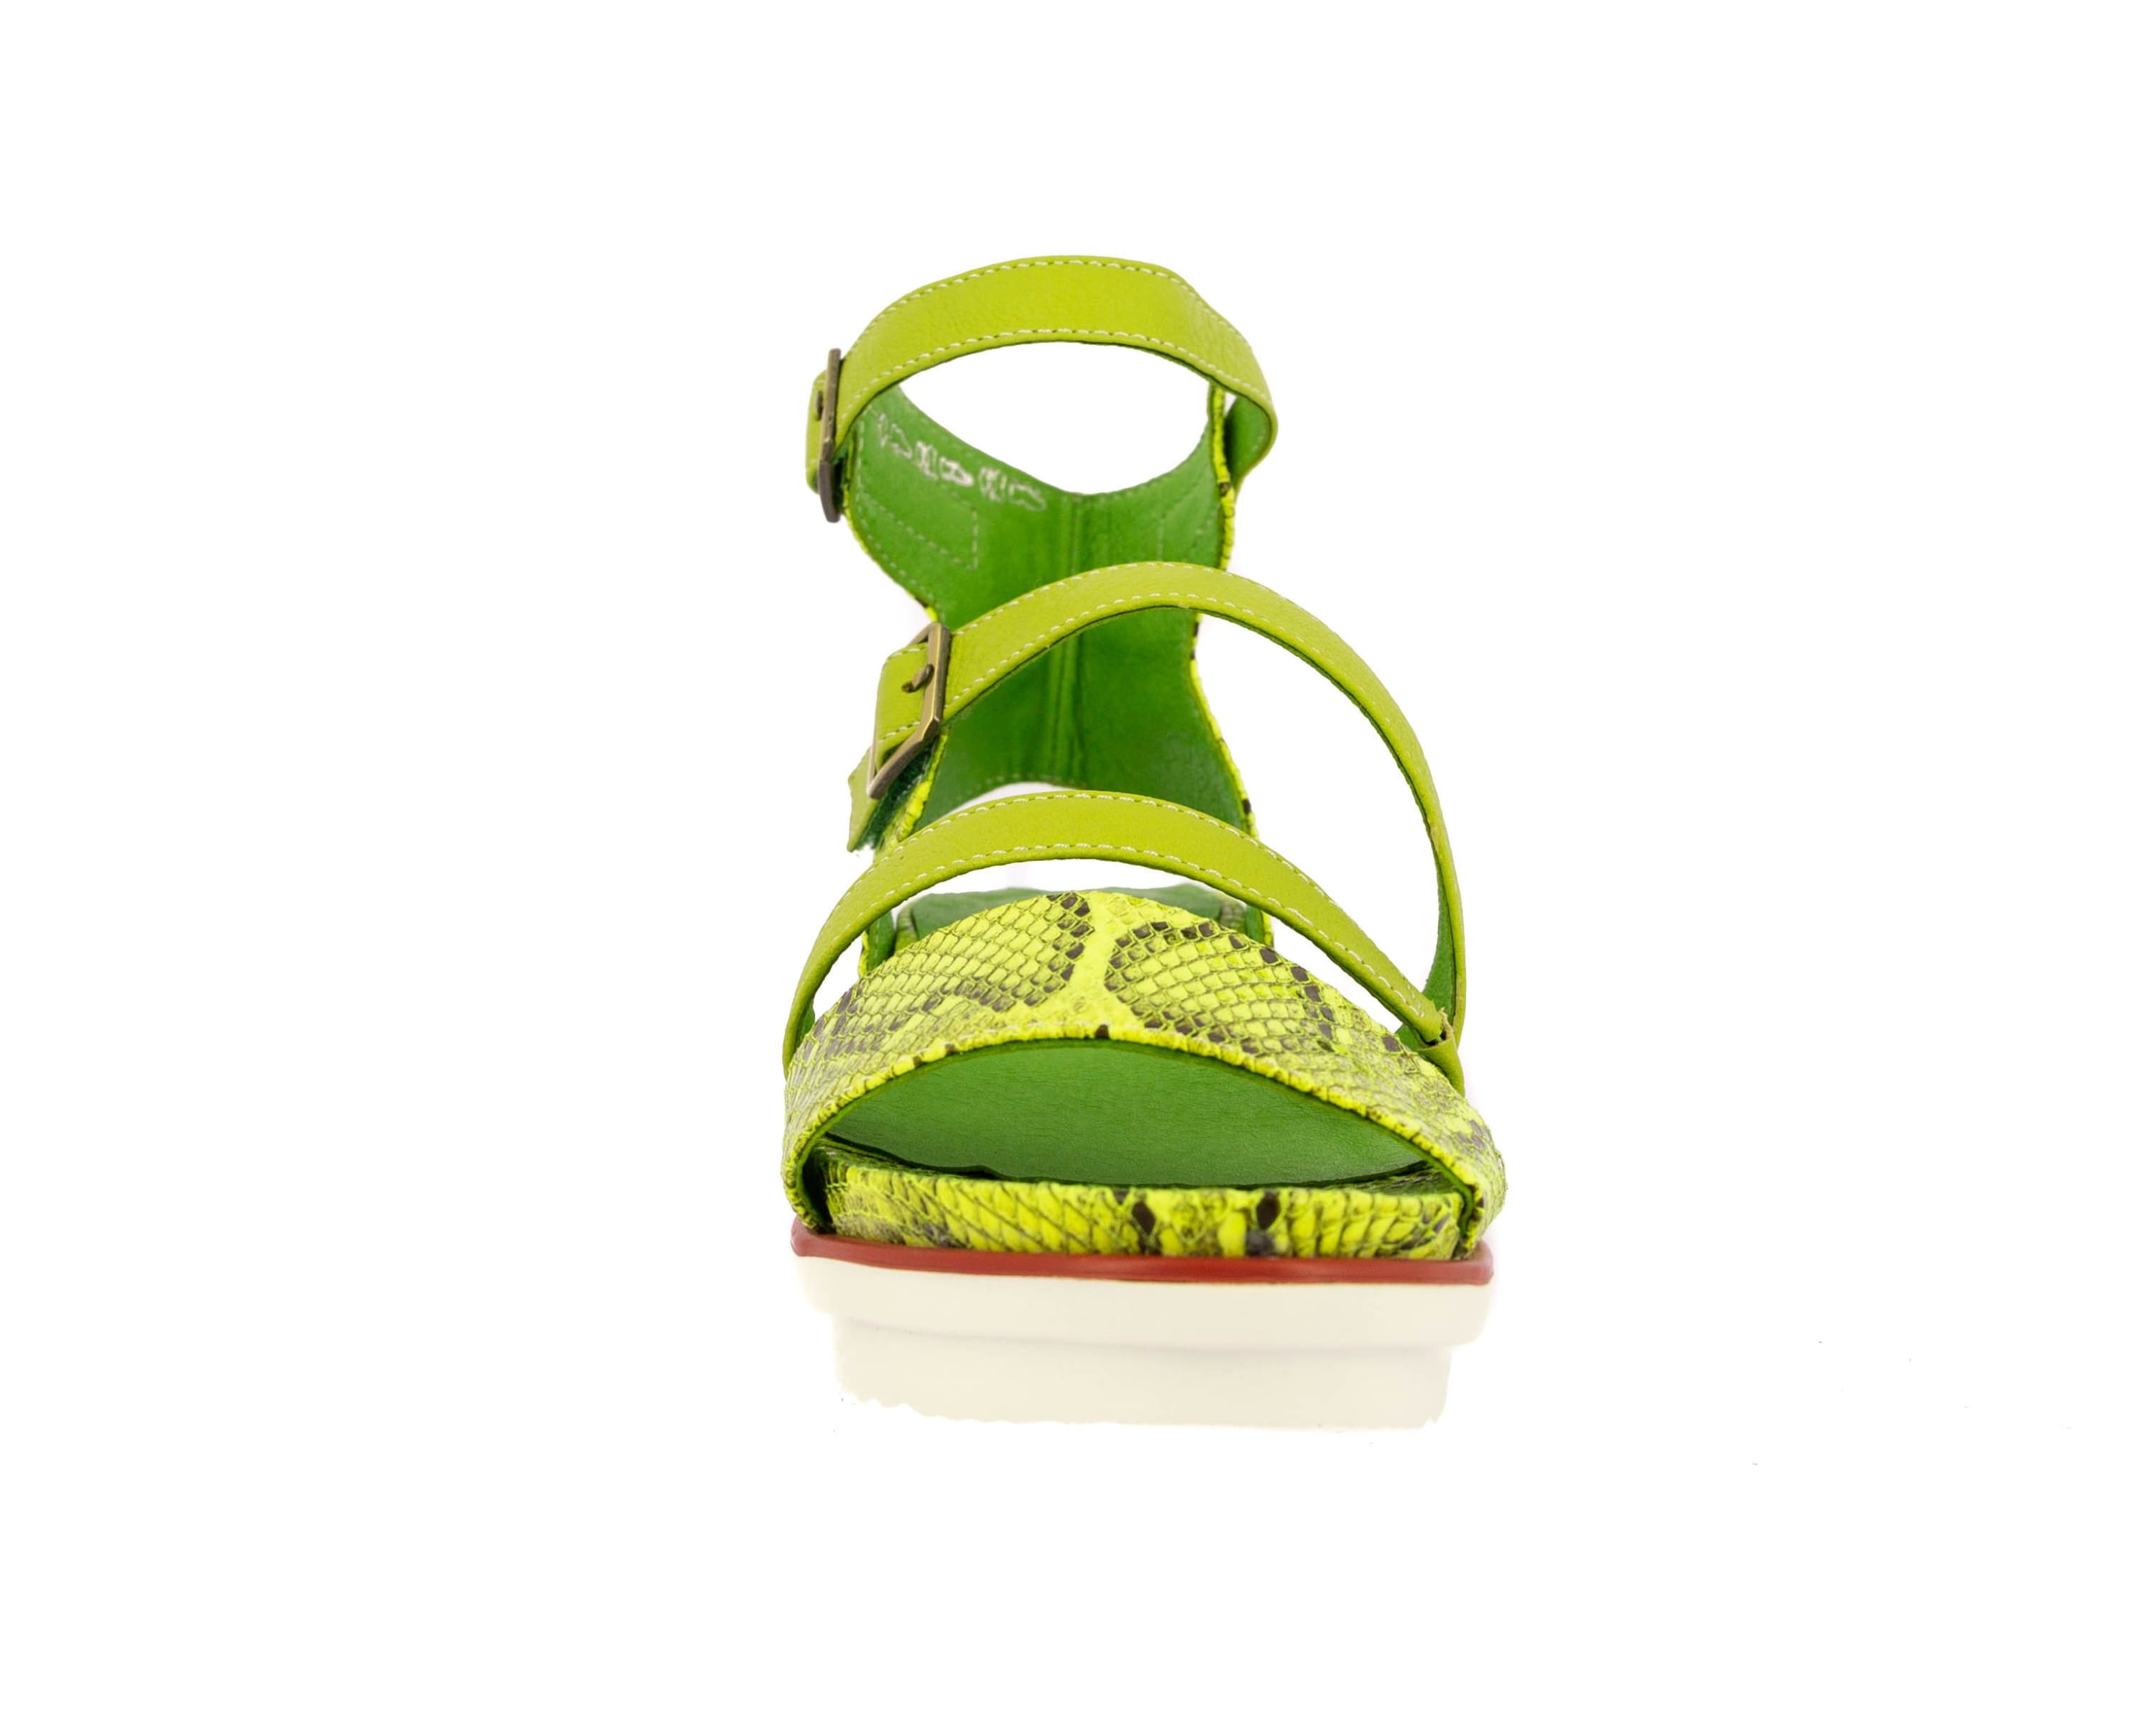 DICEZEO 01 Zapatos - Sandalia